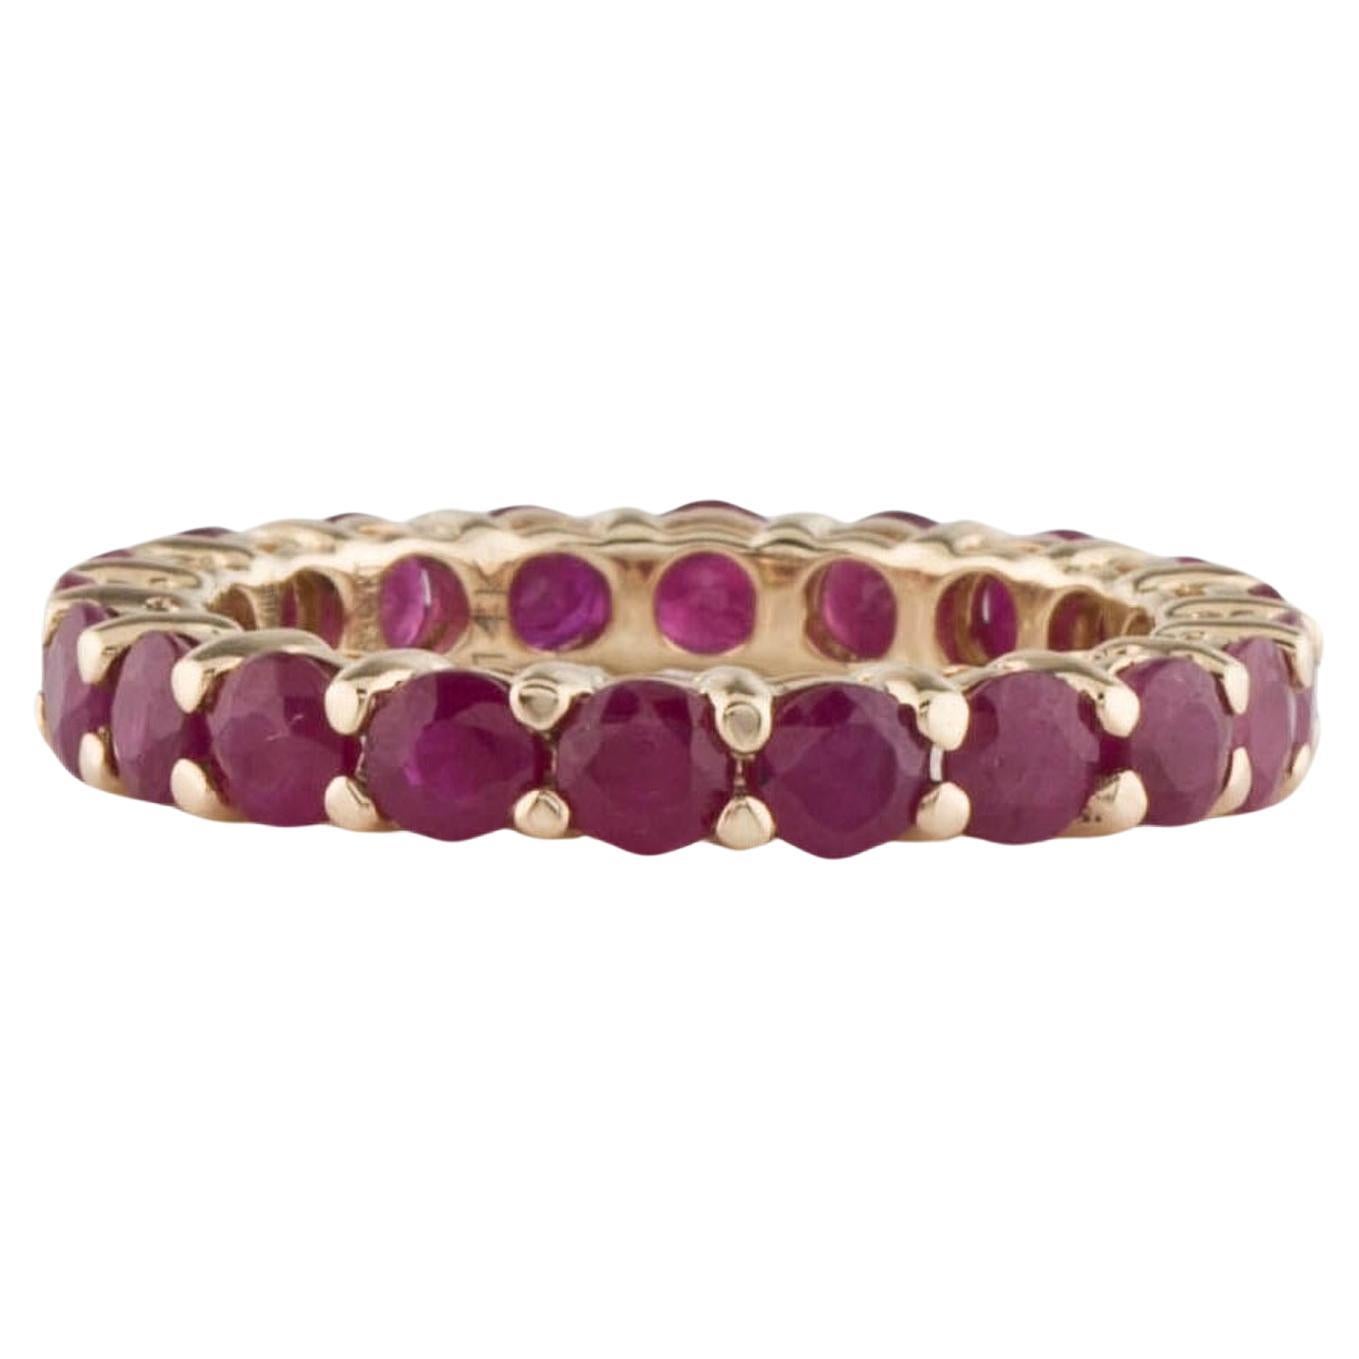 Luxurious 14K Ruby Eternity Band Ring 2.96ctw Size 7 - Elegant Statement Jewelry